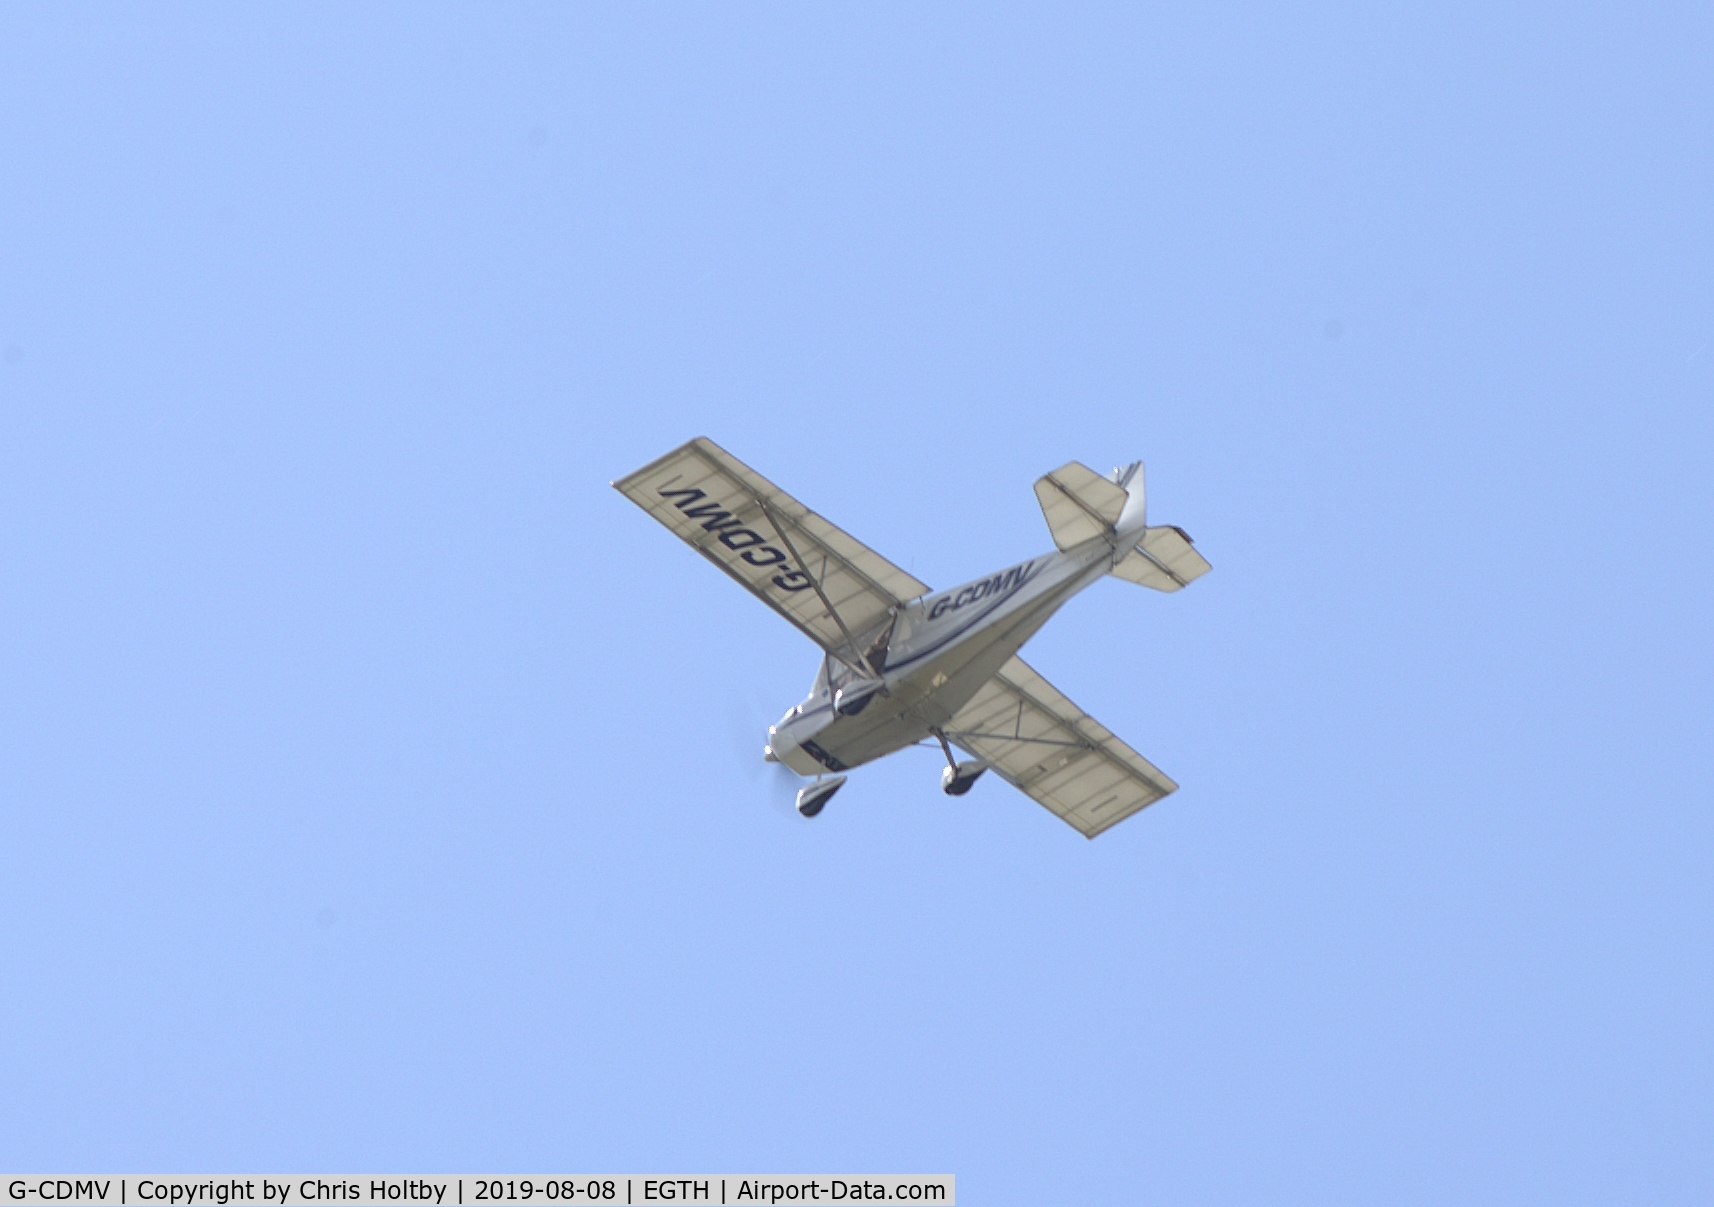 G-CDMV, 2005 Skyranger 912S(1) C/N BMAA/HB/455, Flying over Old Warden airfield